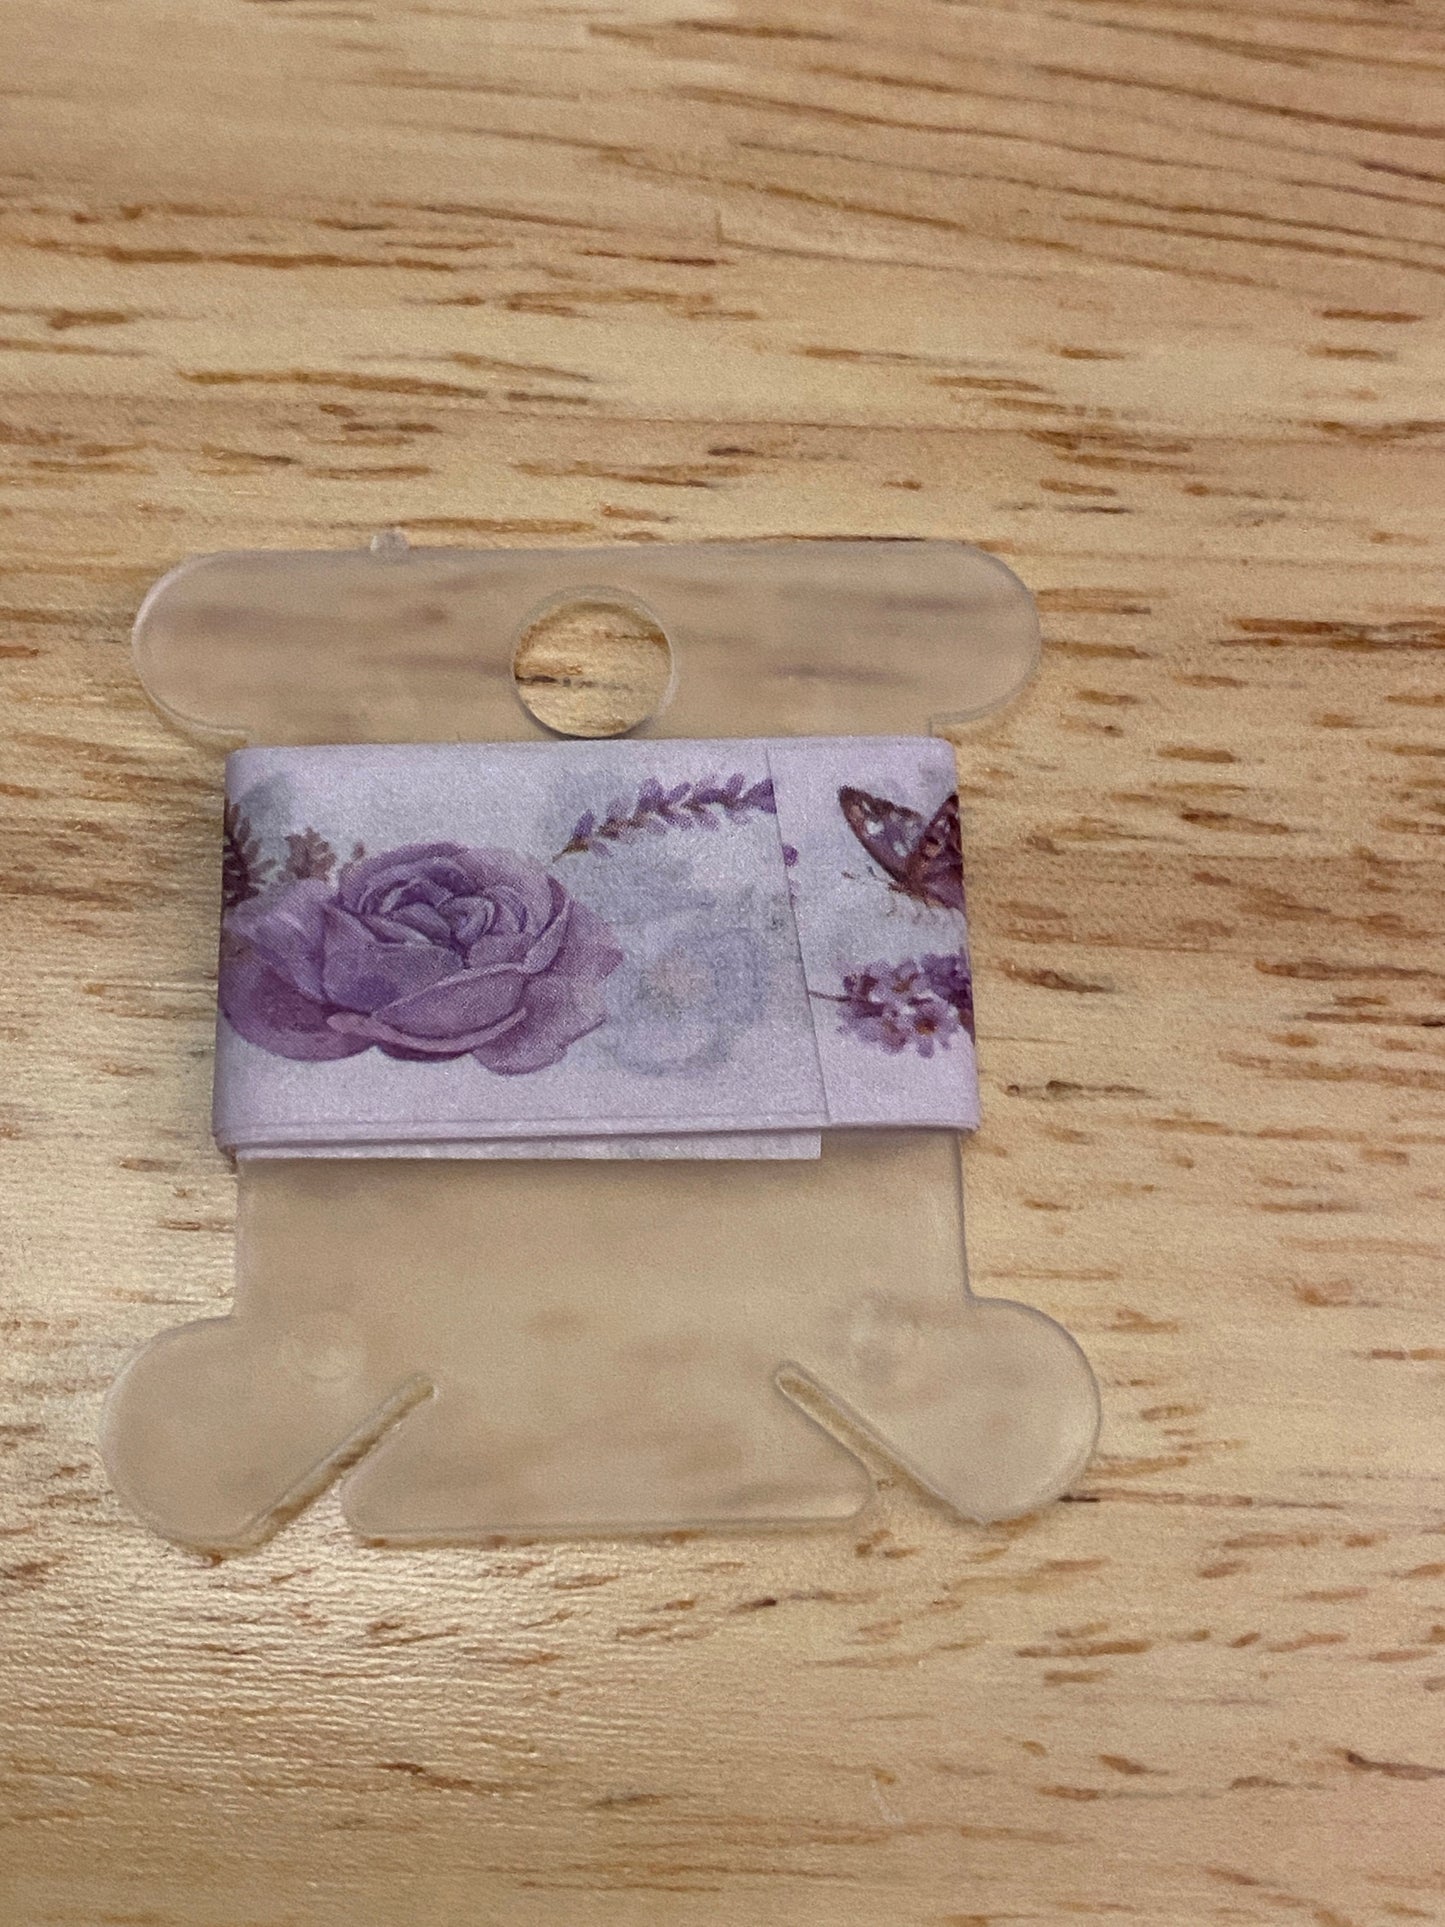 24" Washi Tape Card of Purple Floral Washi Tape